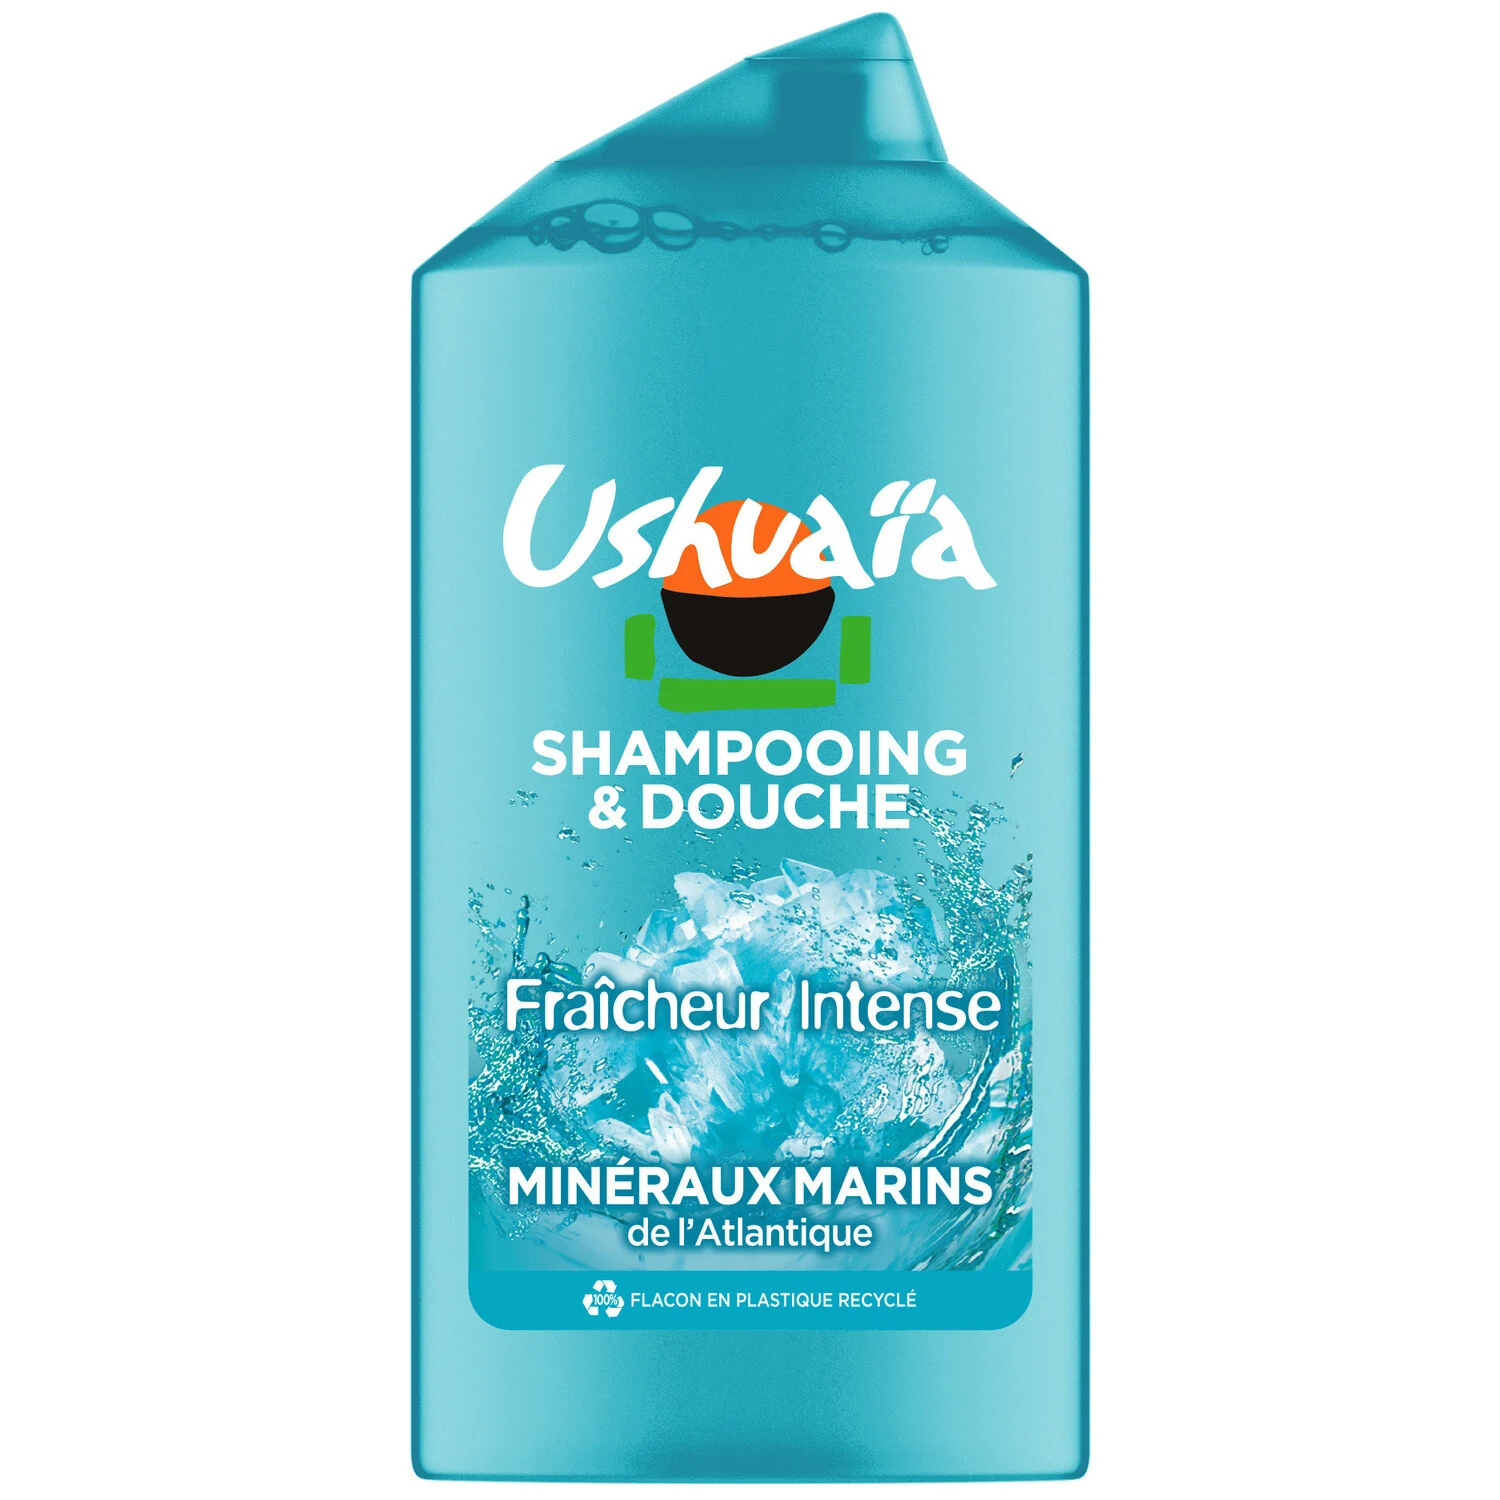 Ushuaia Shower & Shampoo gel Sea minerals 300ml